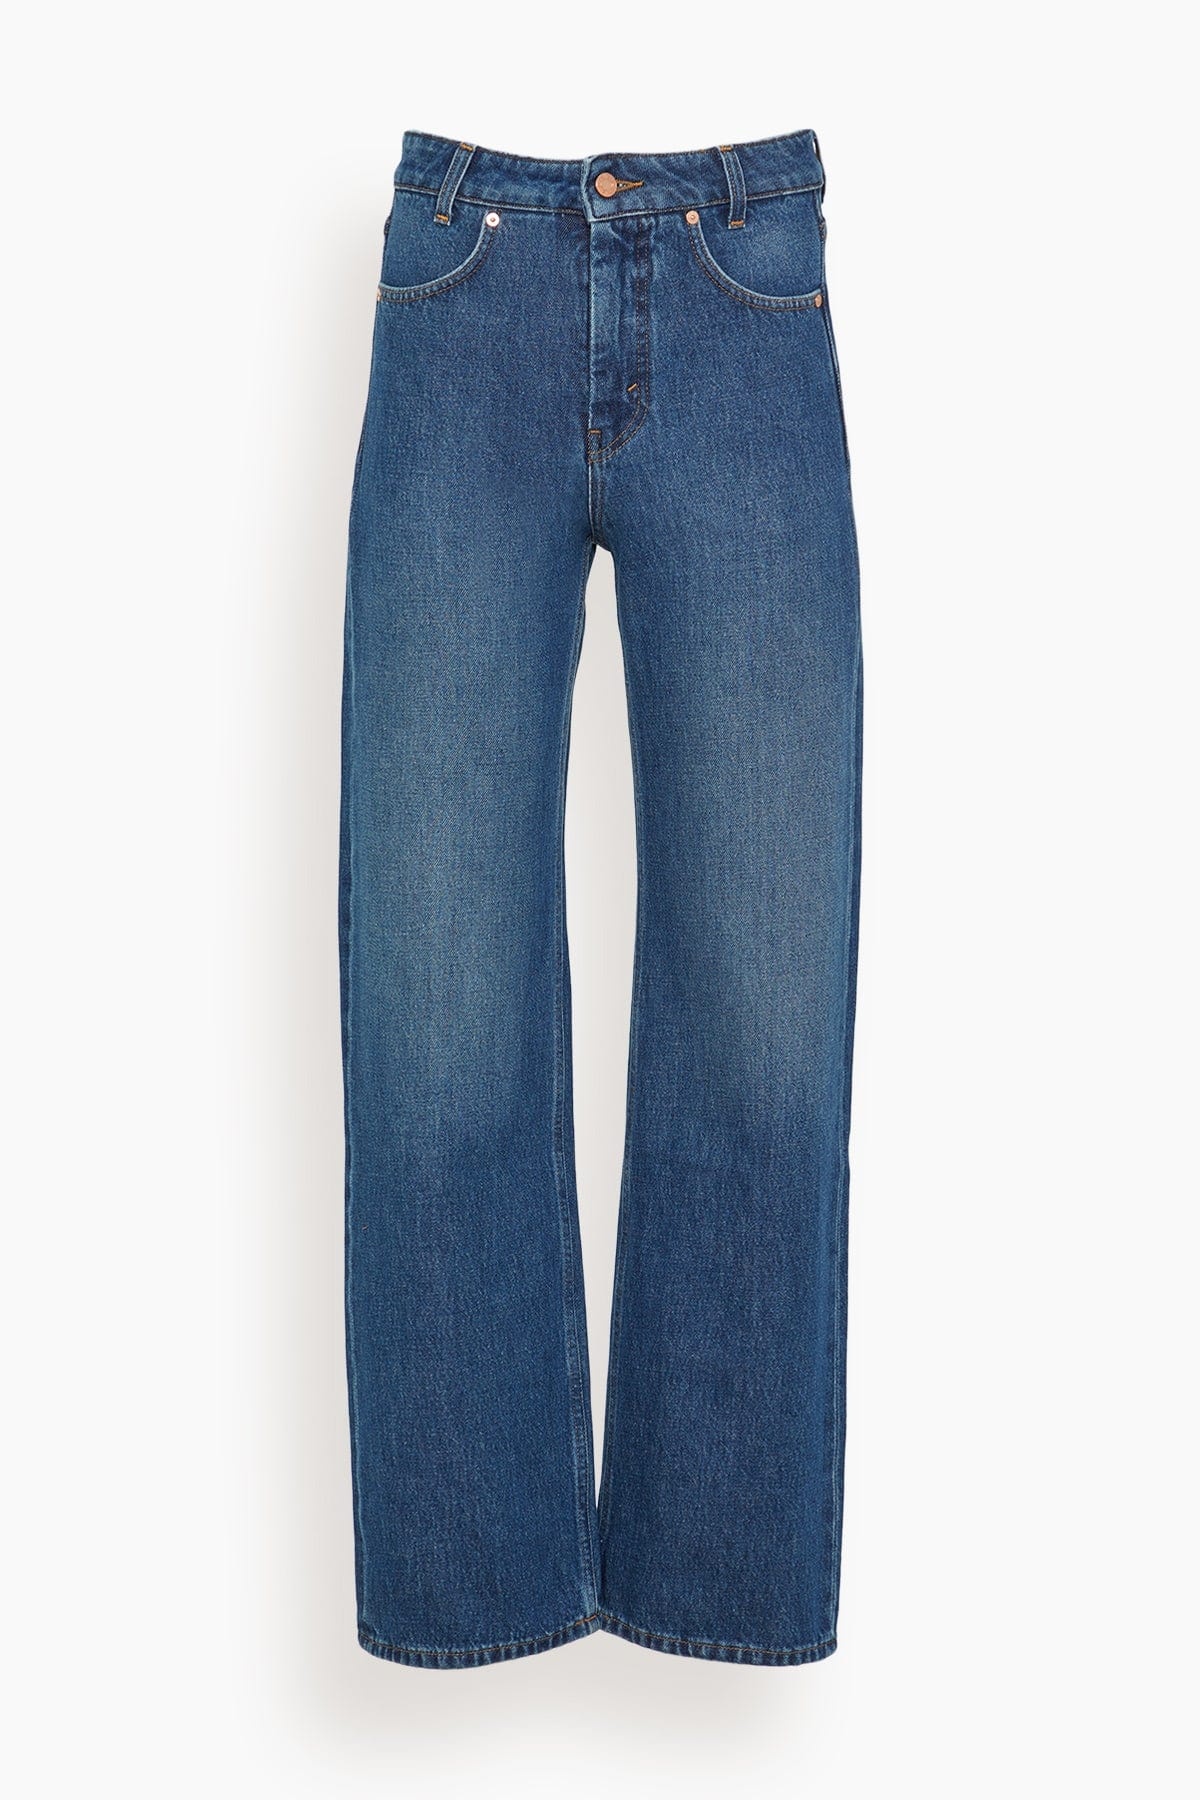 Ease Denim Jeans in Mid Blue - 1